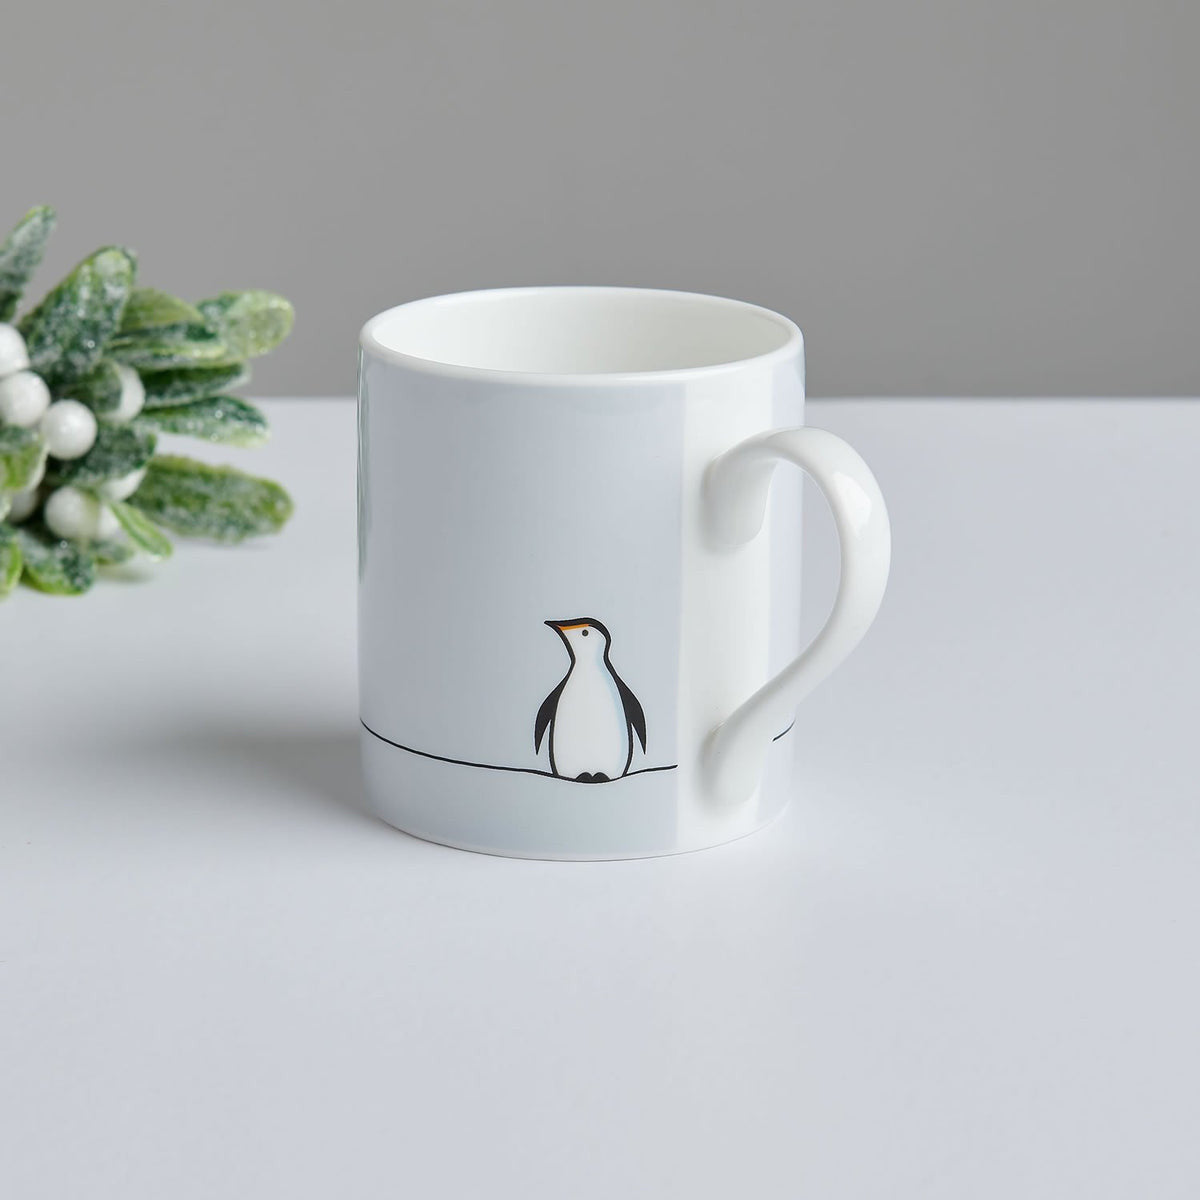 Penguin Bone China Mug by Jin Designs.